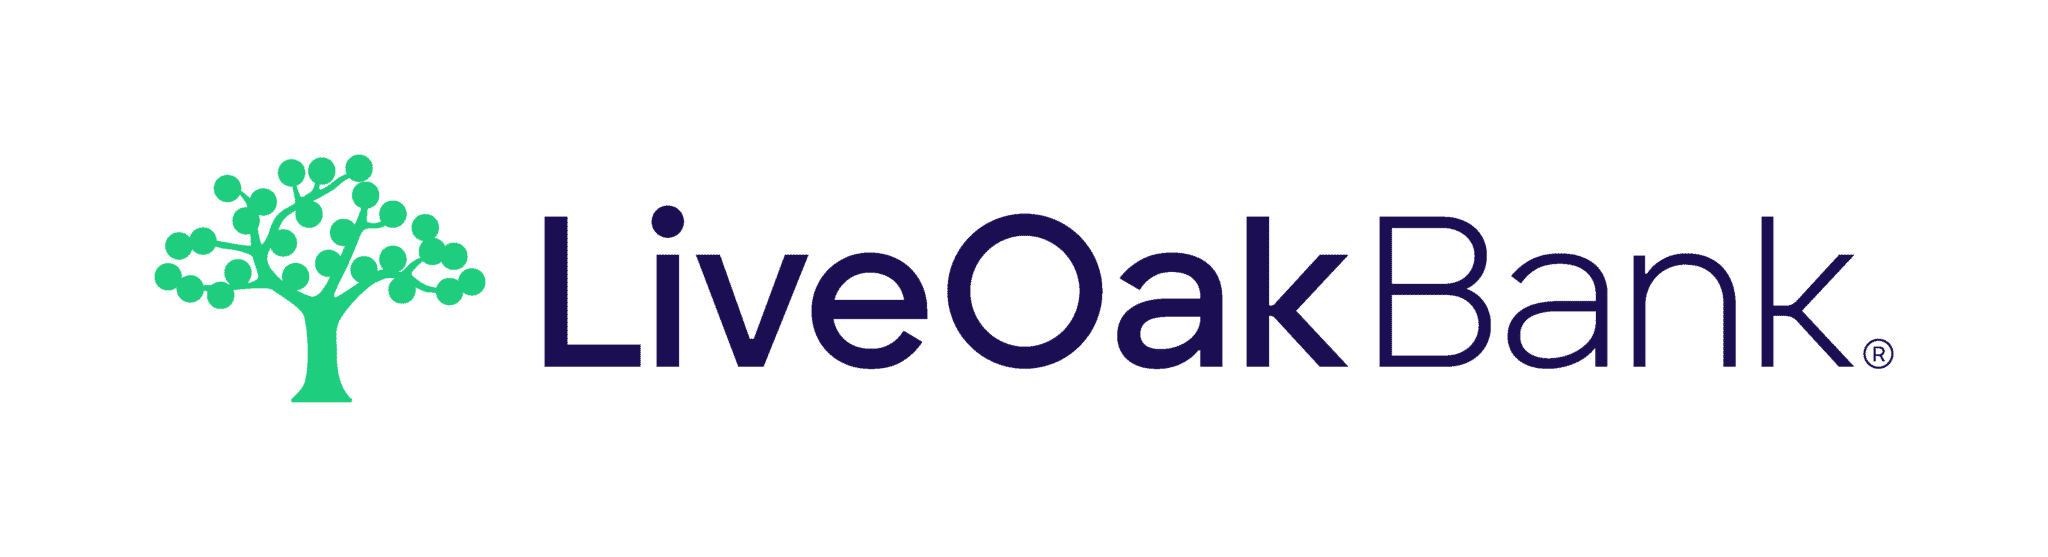 Live Oak Bank 5-Year CD